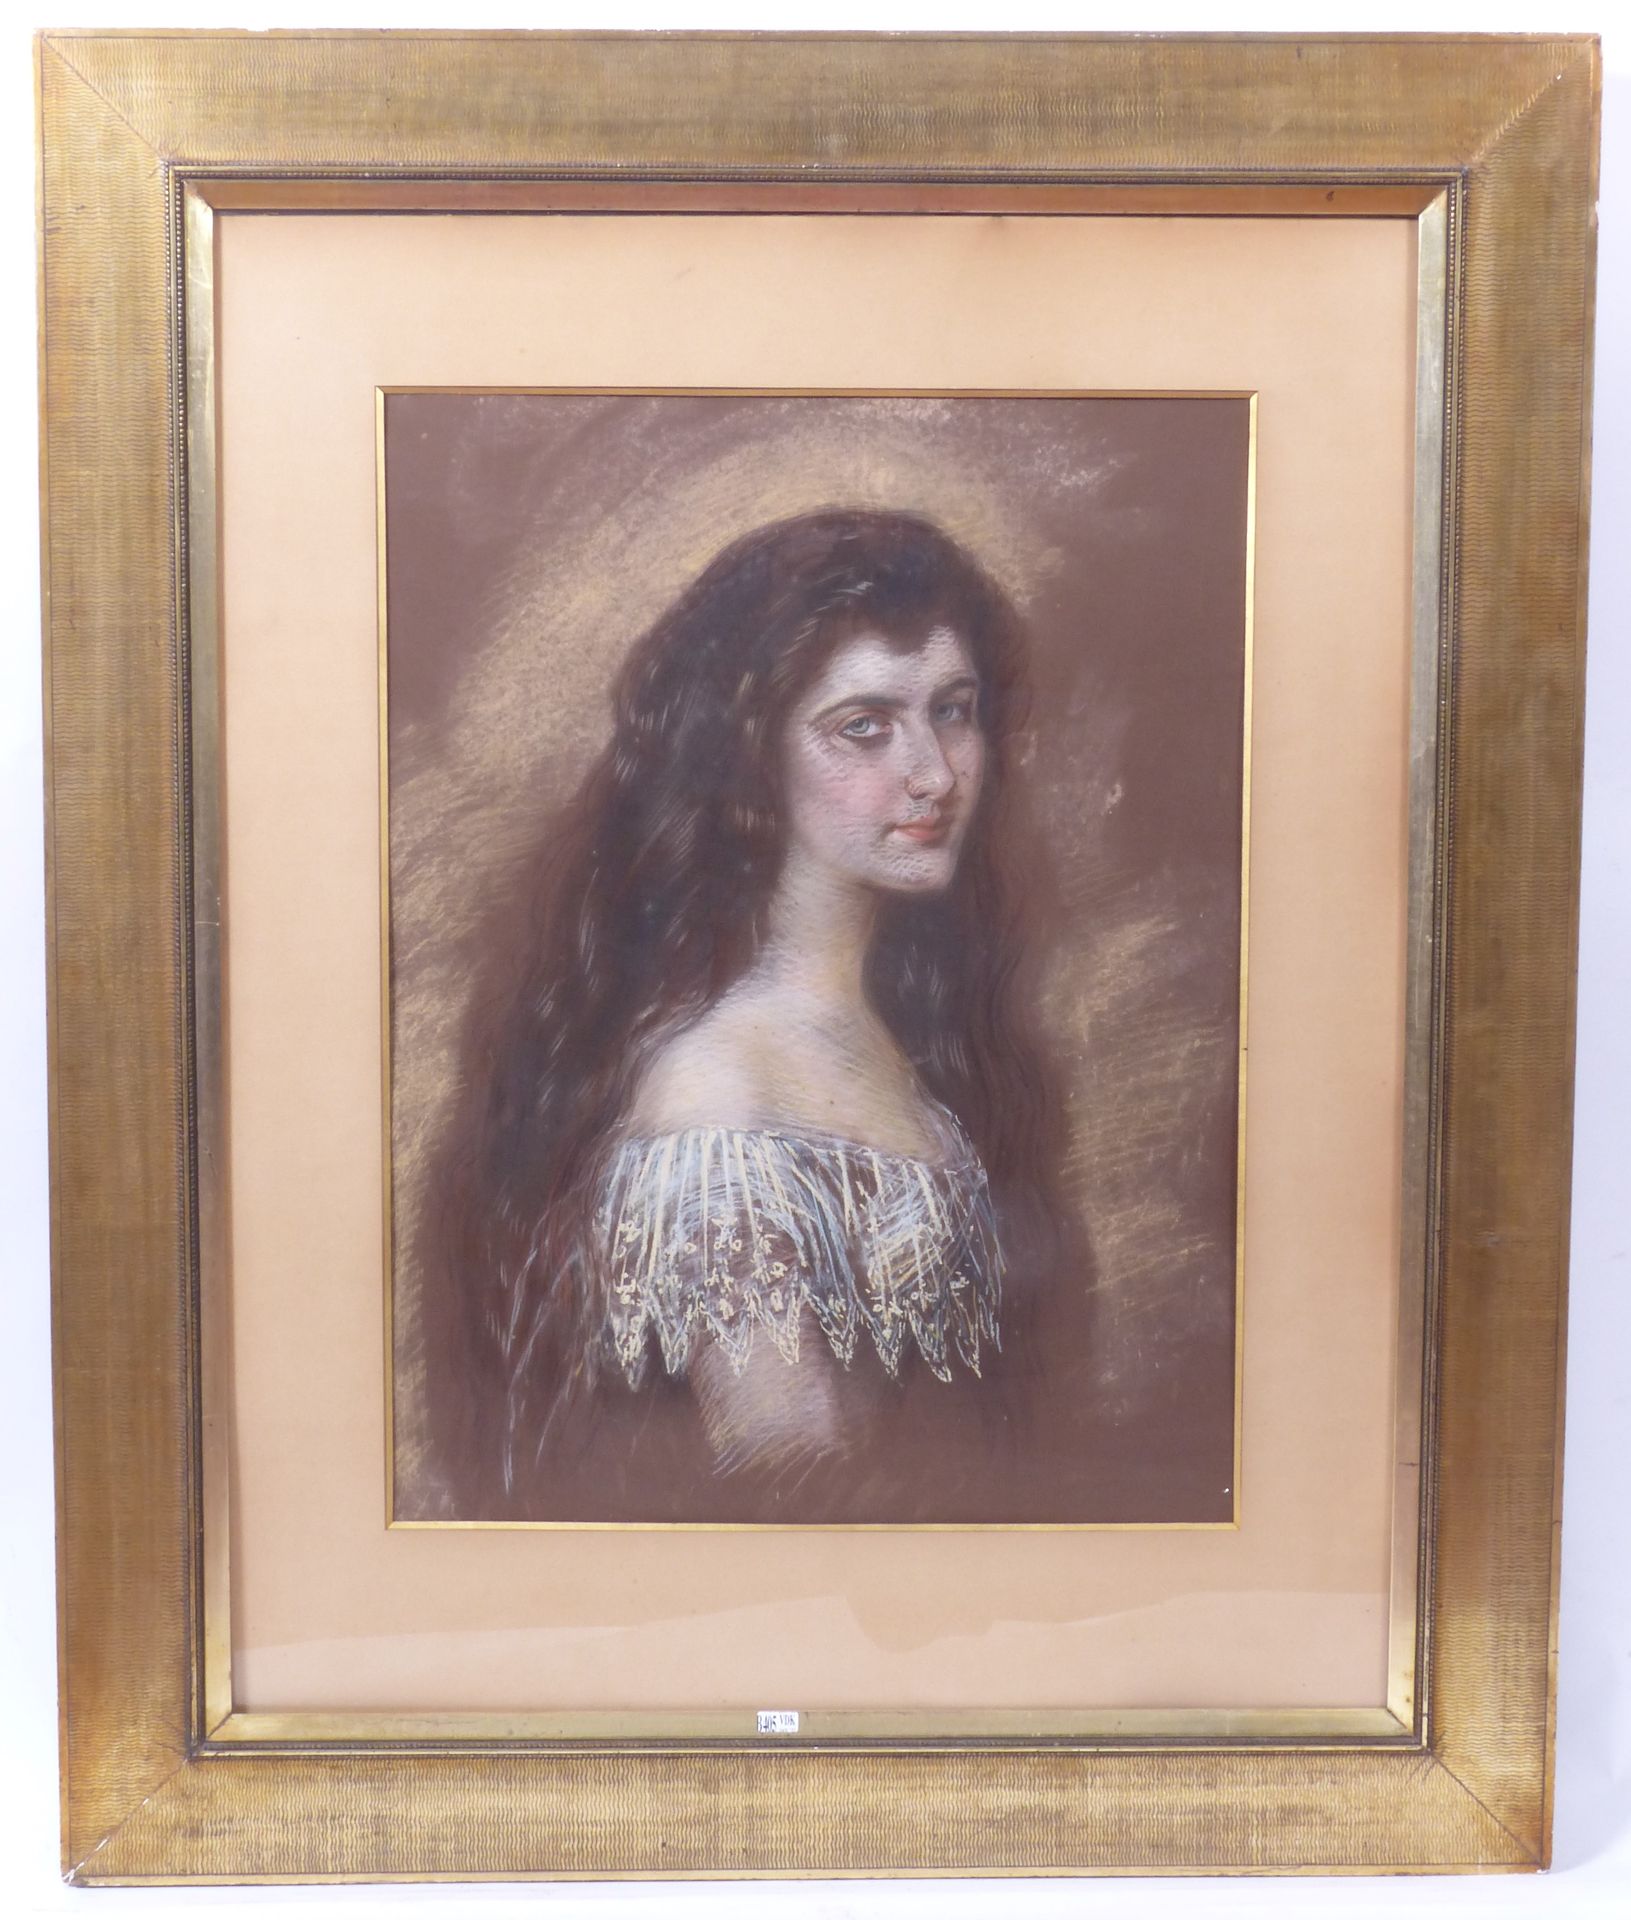 Null 粉彩画 "女人的肖像"。签名为Antoine de Salomé，日期为1875年。年代：19世纪。尺寸：70x51.5厘米。